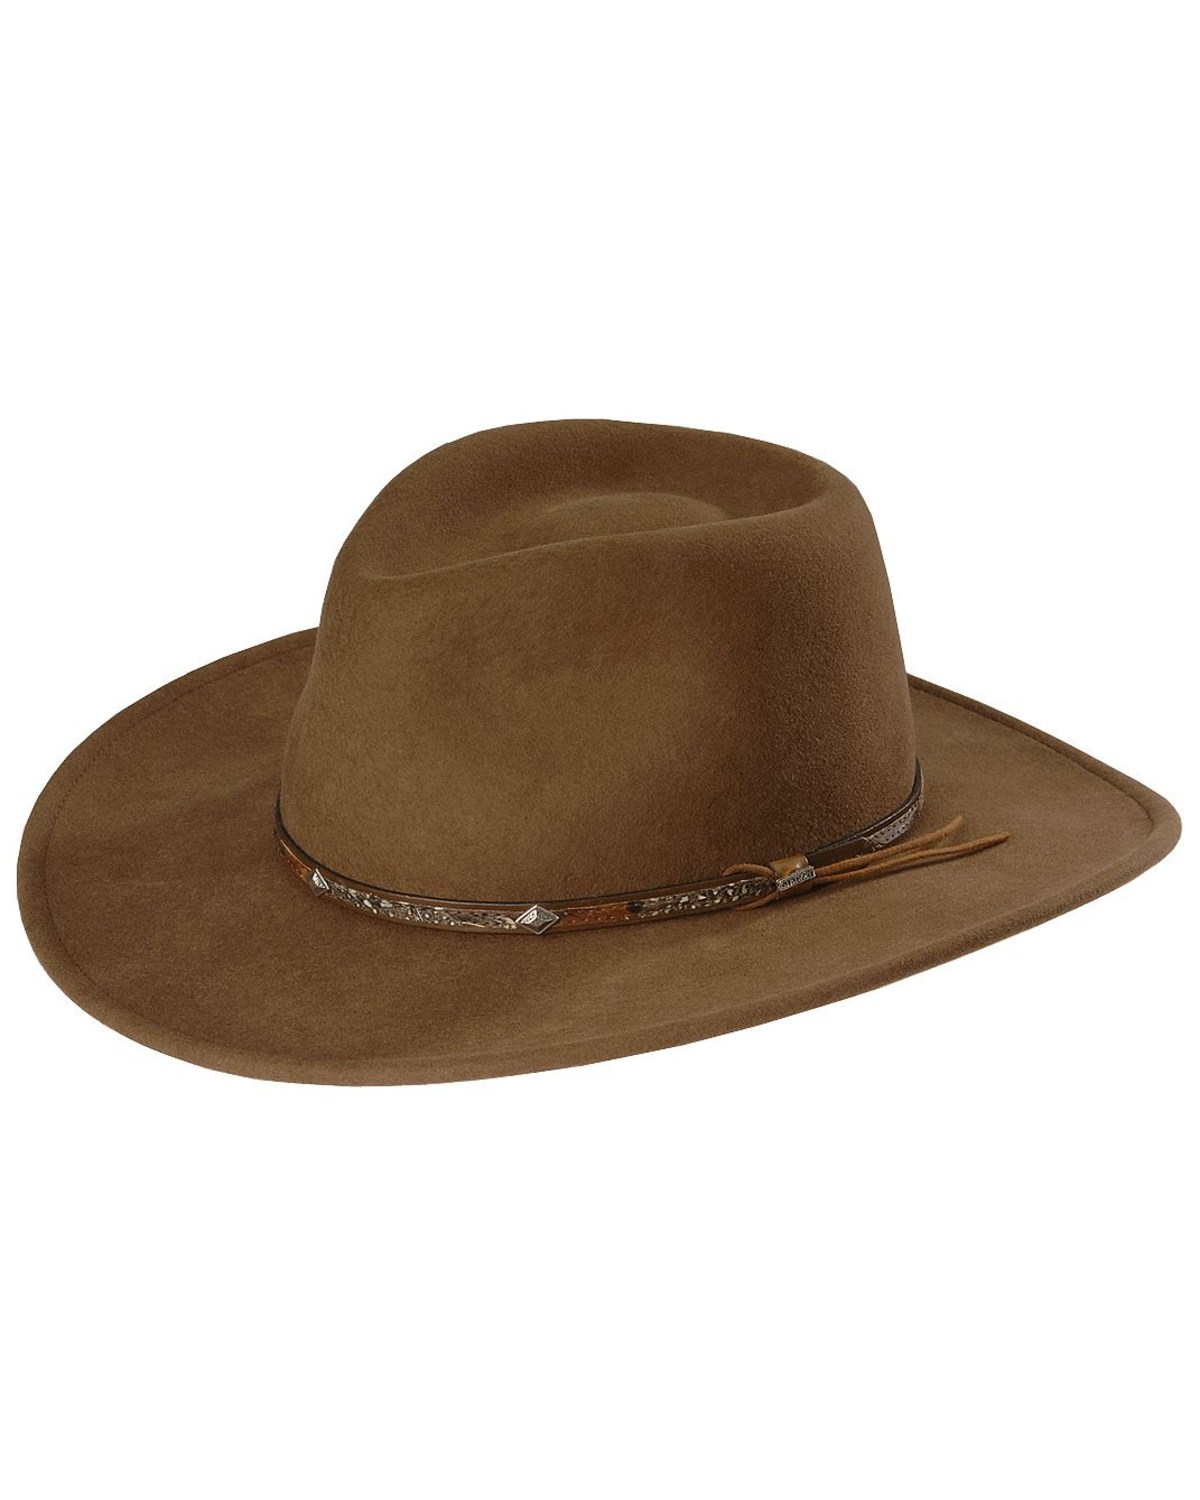 Stetson Men's Mountain Sky Crushable Felt Western Fashion Hat